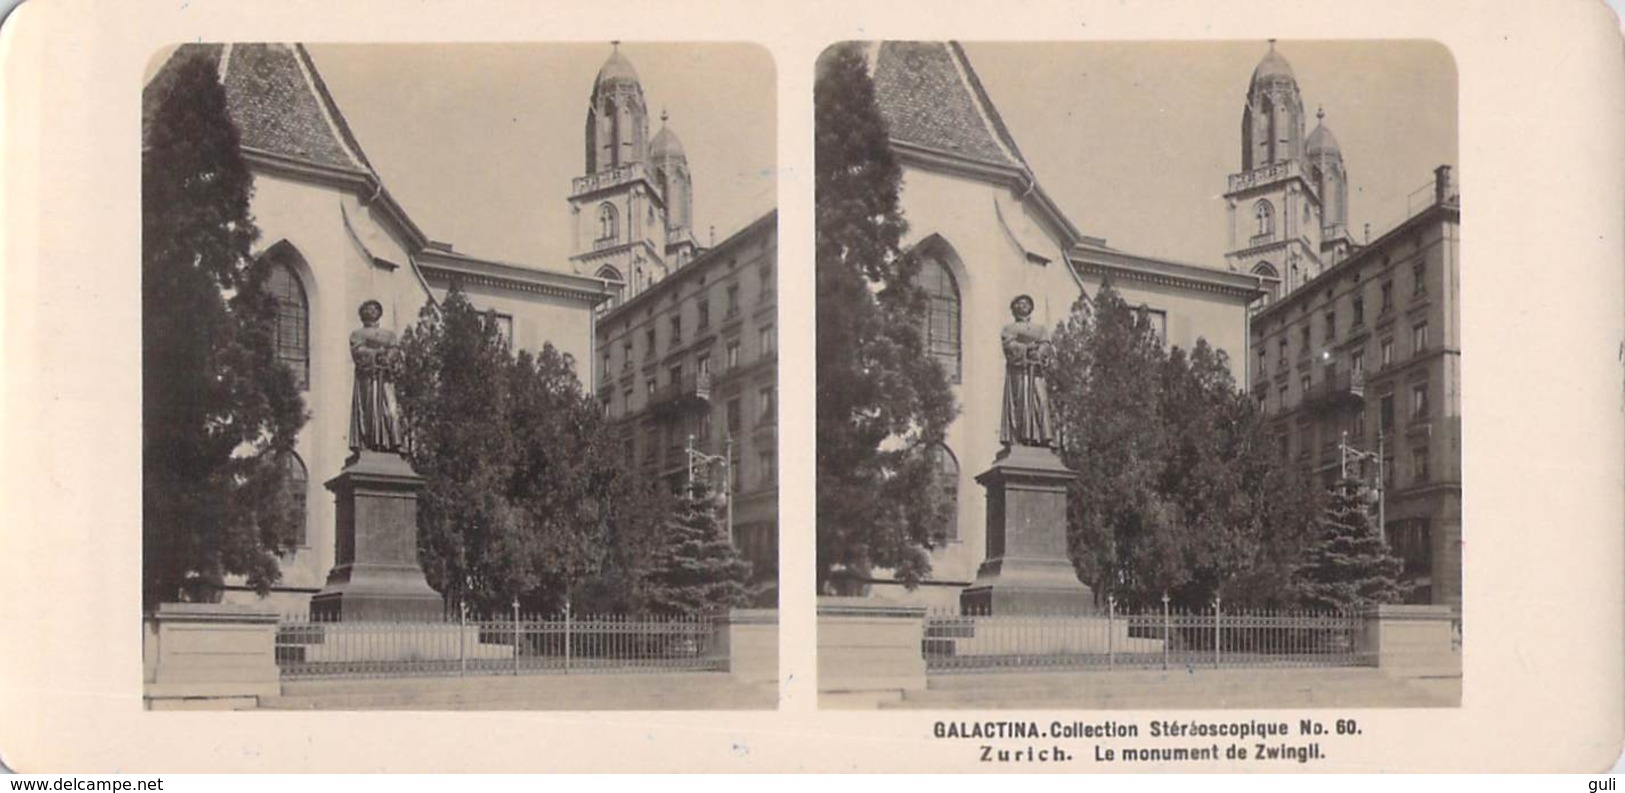 Collection Stéréoscopique GALACTINA N°60/ZURICH Le Monument Zwingli -photos Stéréoscopiques NPG 1906 - Stereoscopic